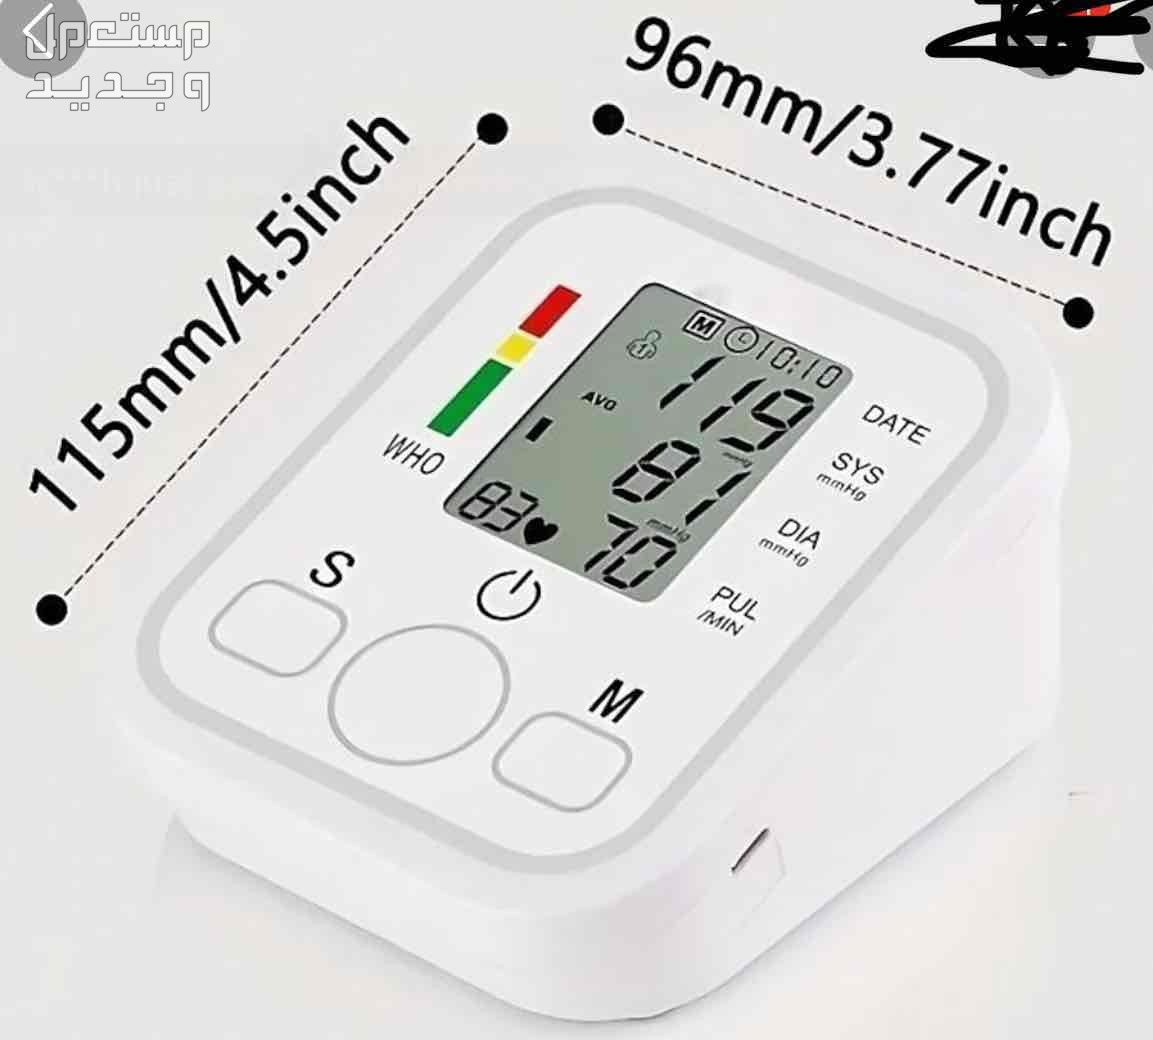 digital blood pressure monitoring  in Muharraq at a price of 9 BHD